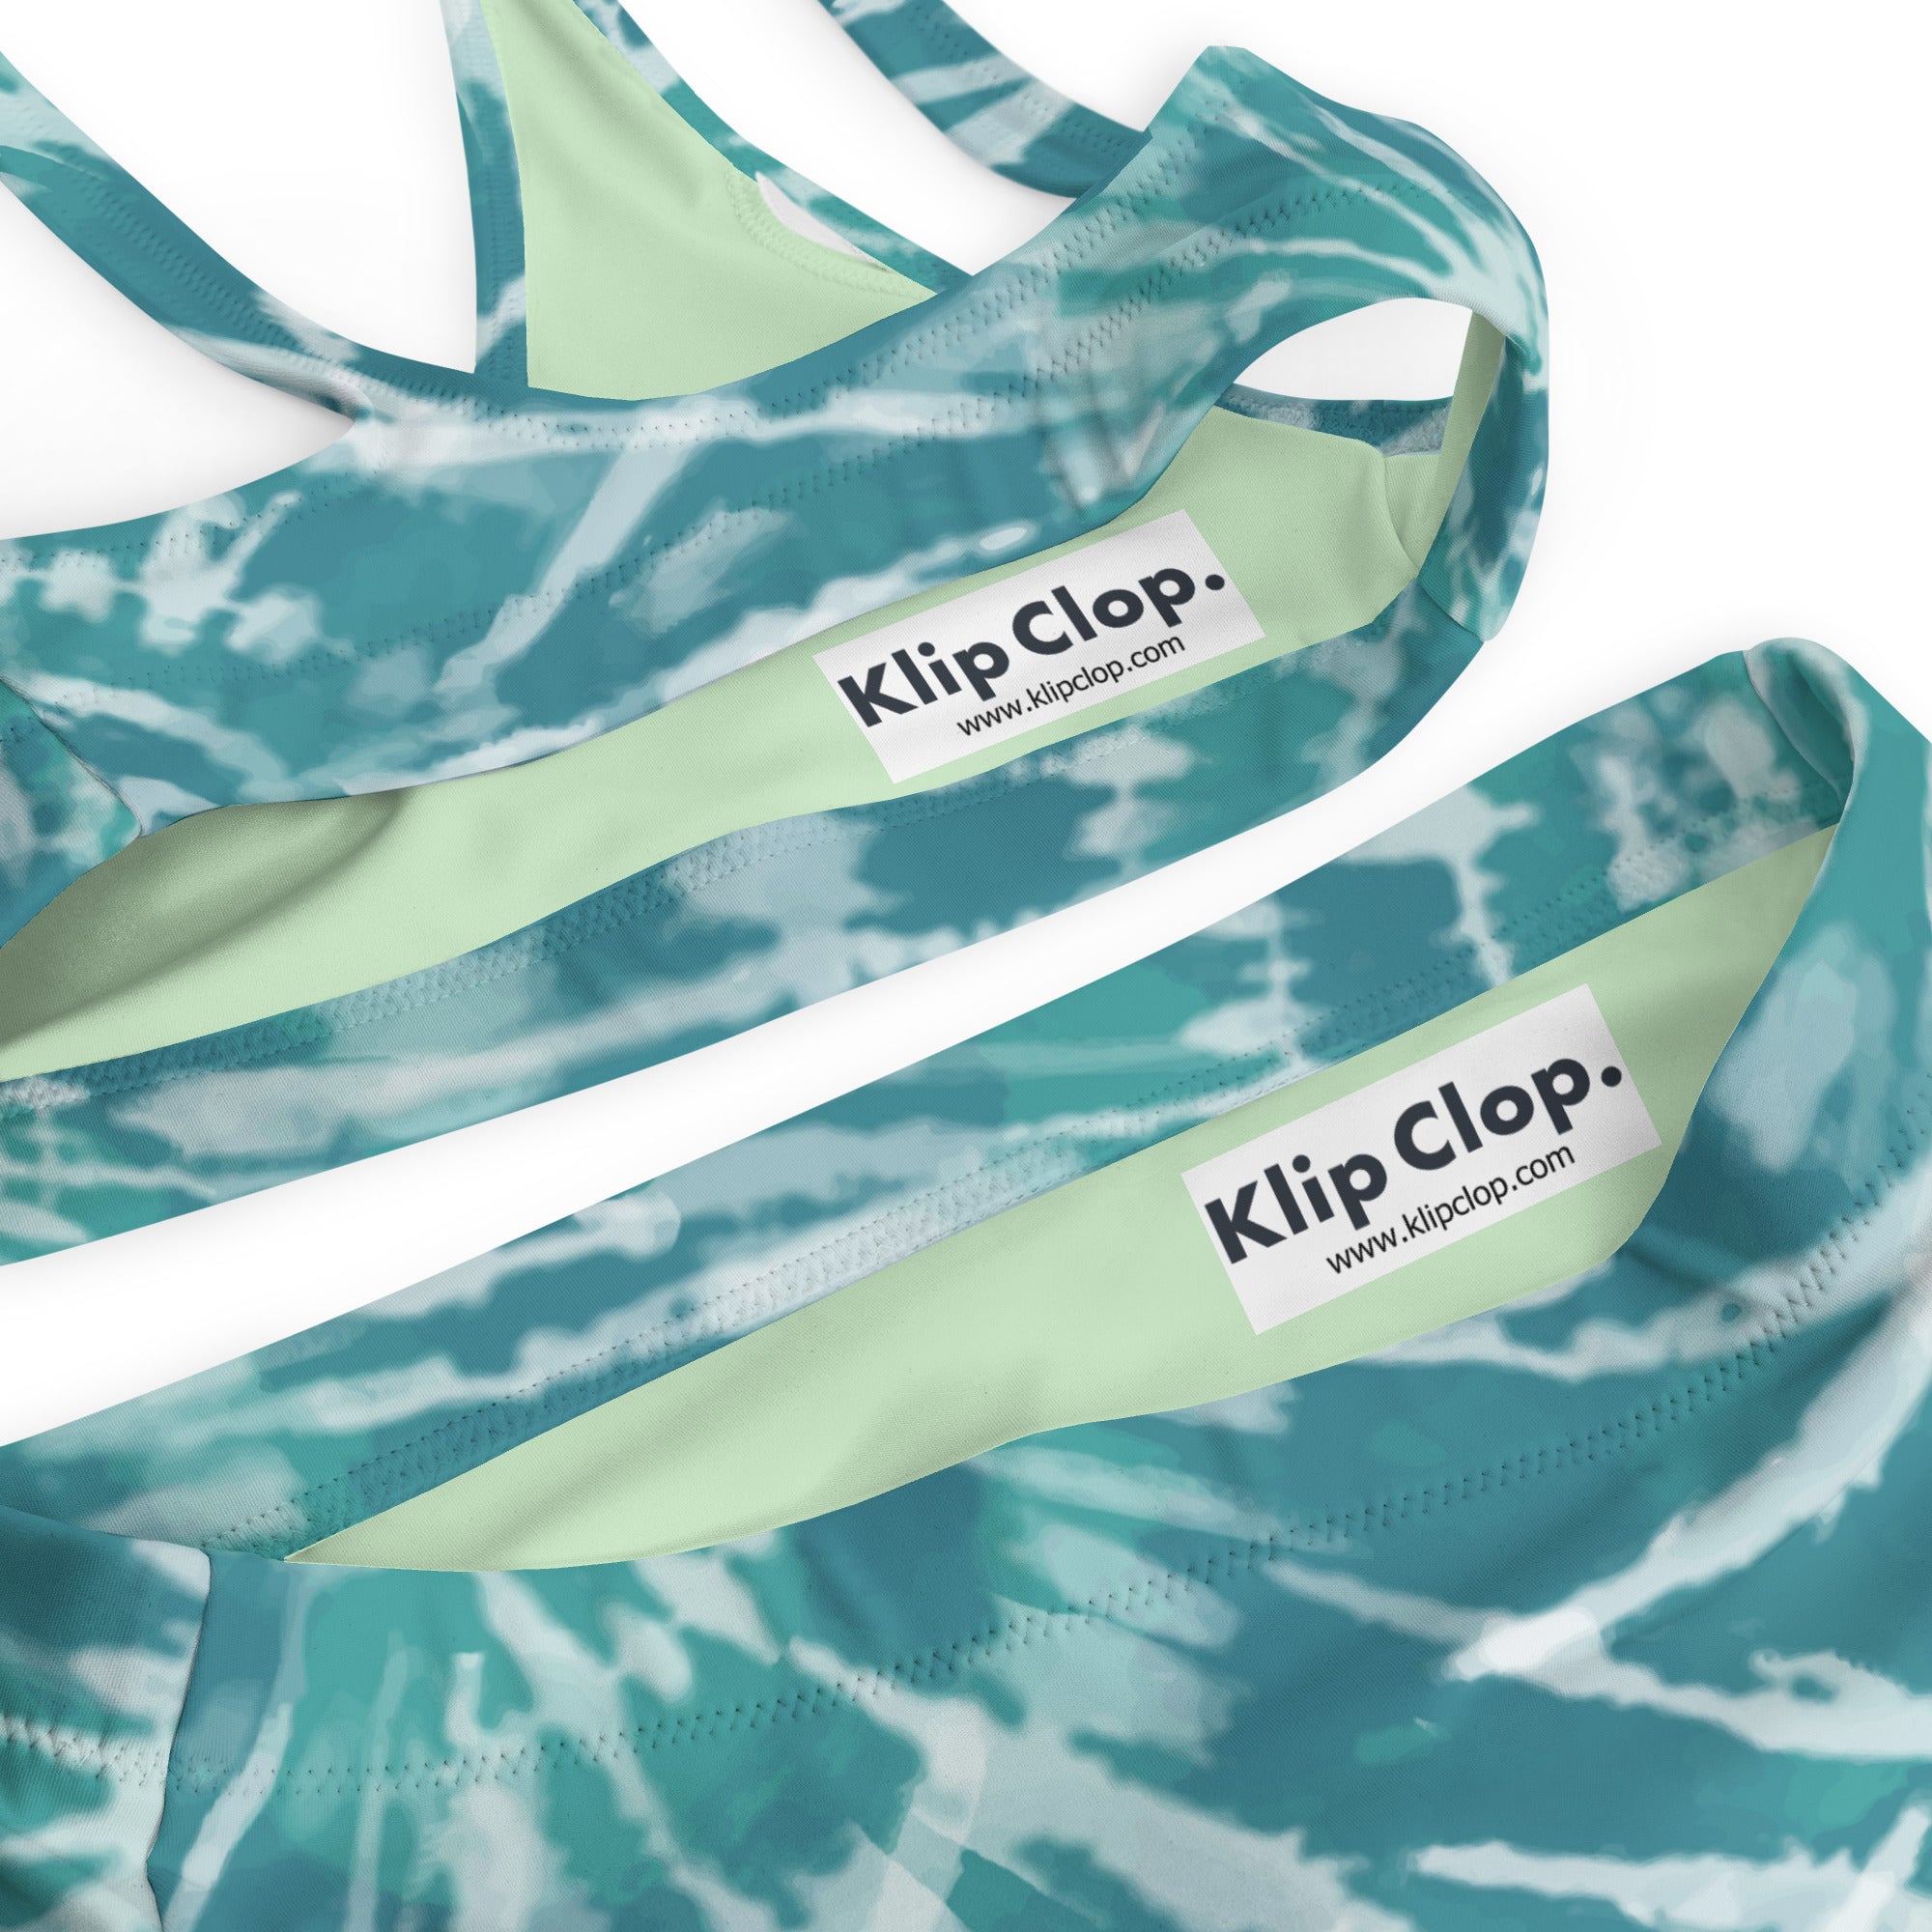 Recycled high-waisted bikini- Hang Loose Tie Dye Pattern V